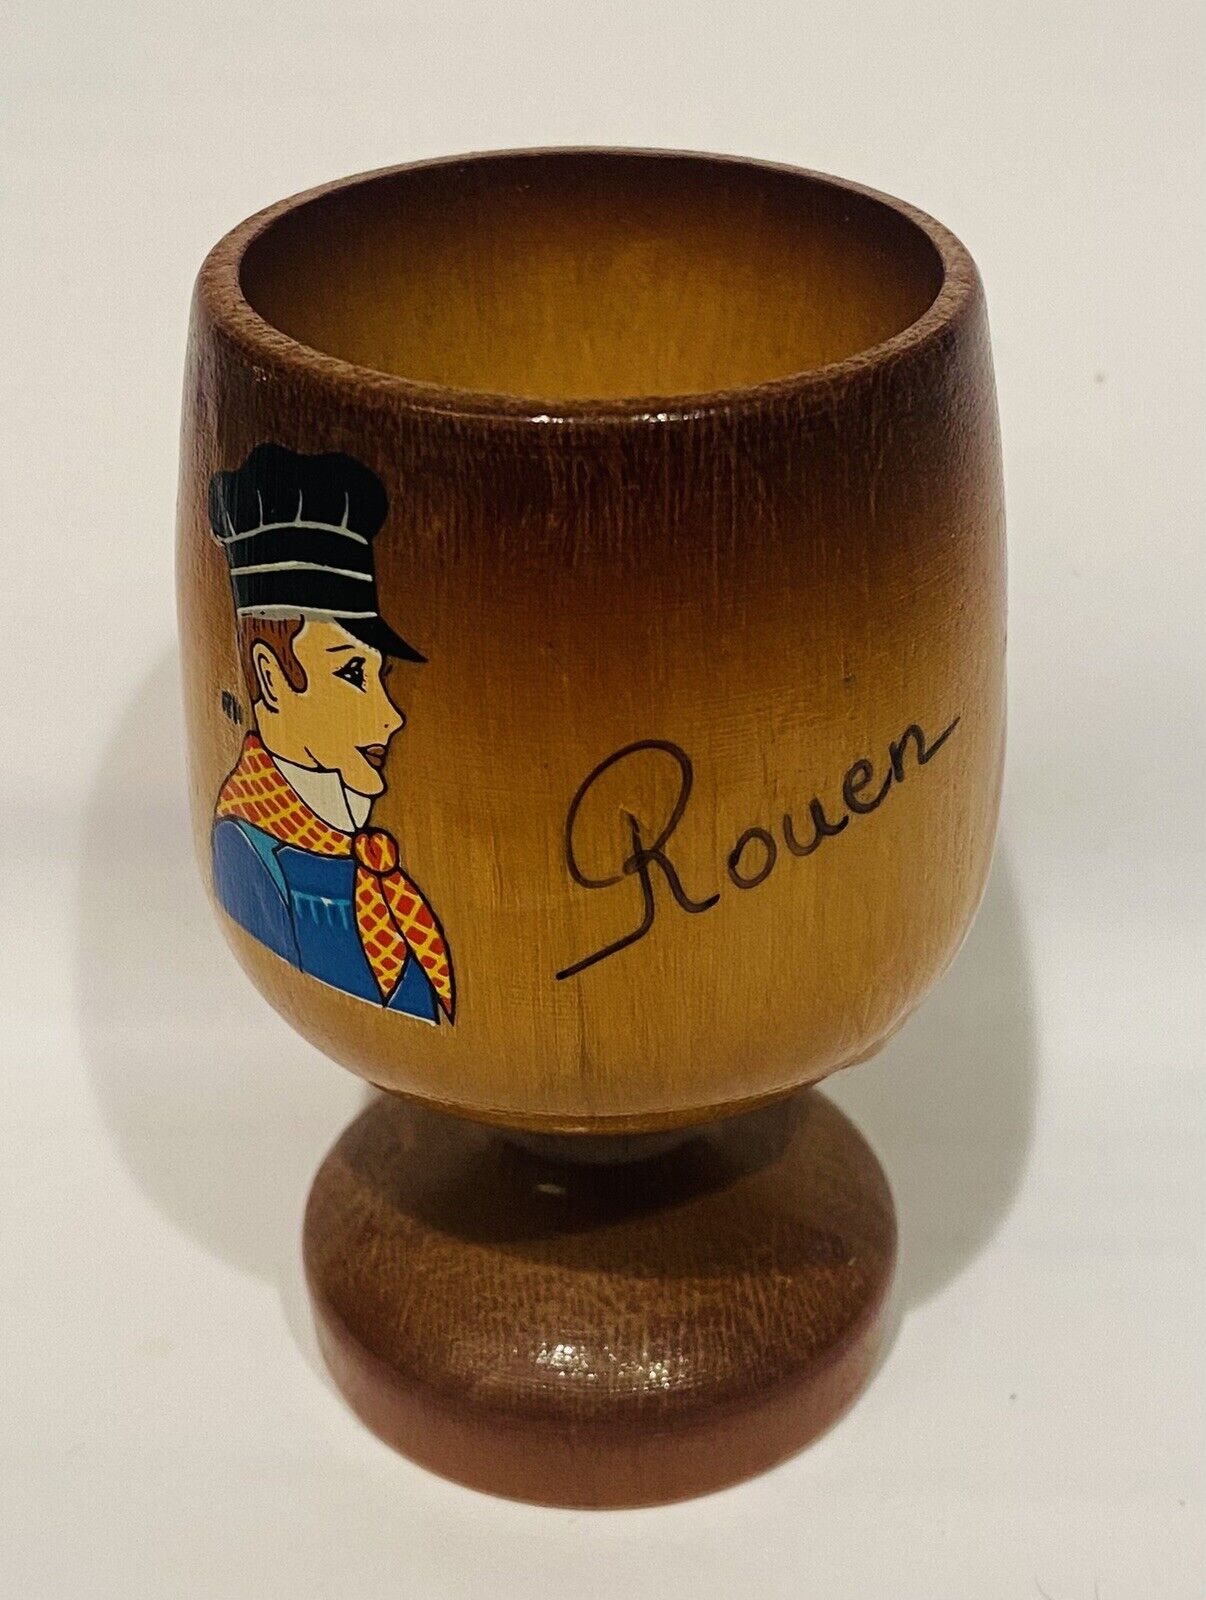 Vintage Beautiful Wooden Eggcup Souvenir Rouen France With Train Conductor Motif